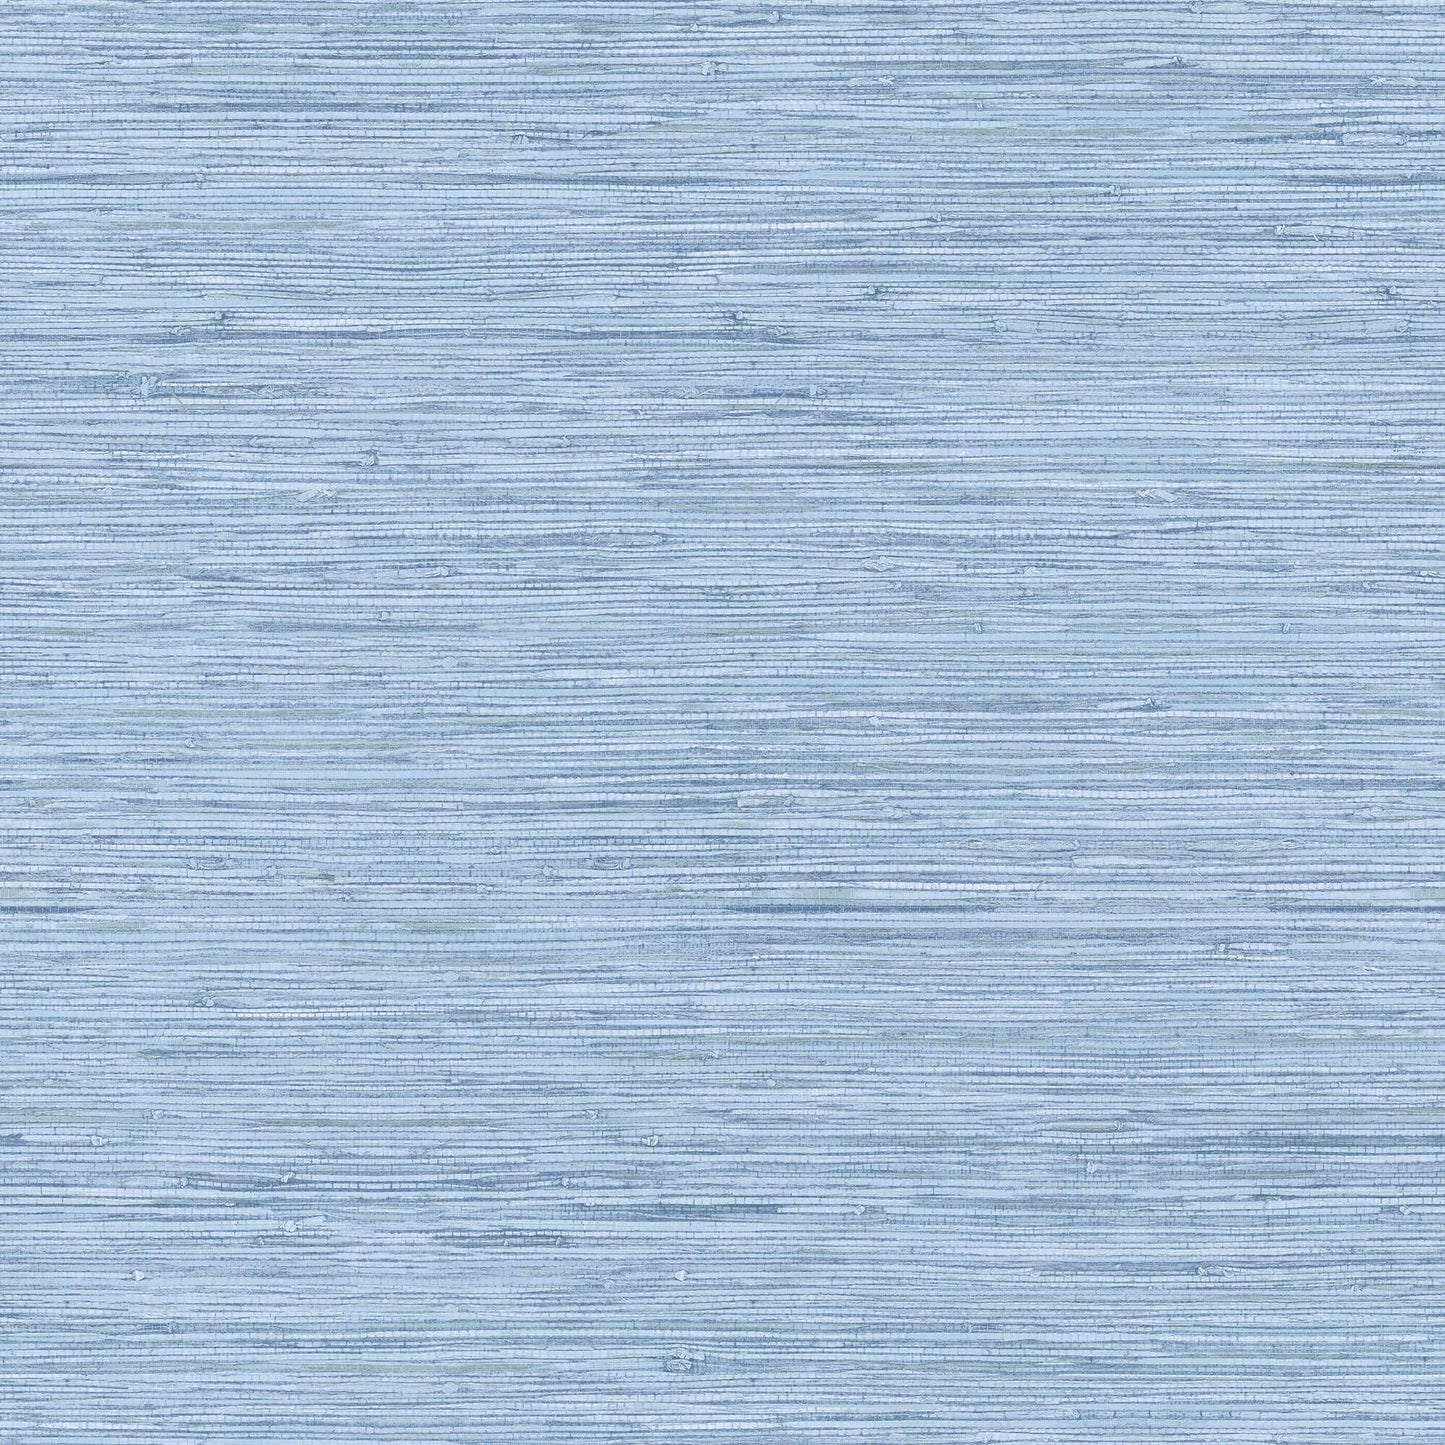 Horizontal Grasscloth Wallpaper - SAMPLE ONLY